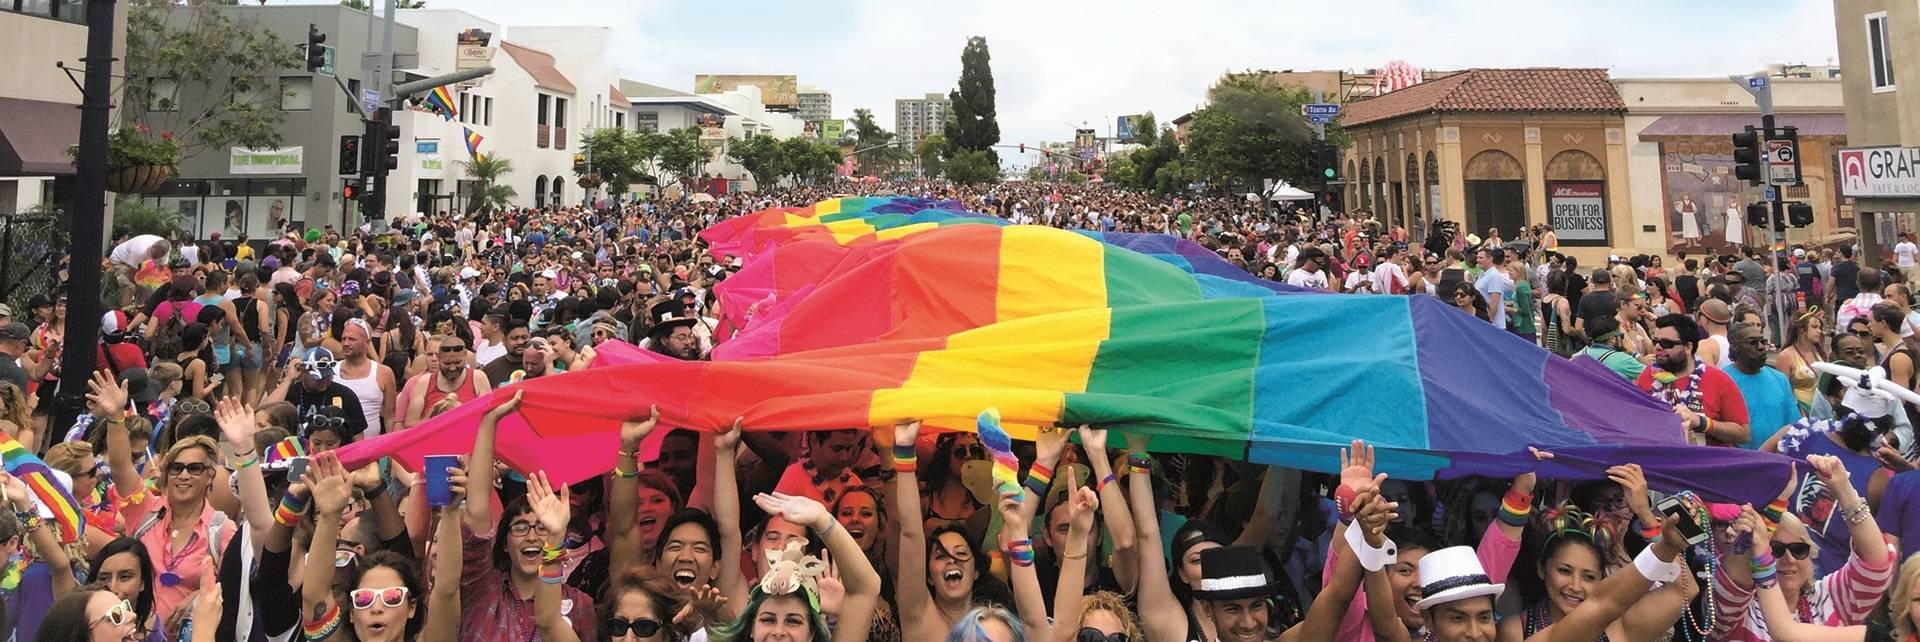 gay pride san diego 2019 church in the parade